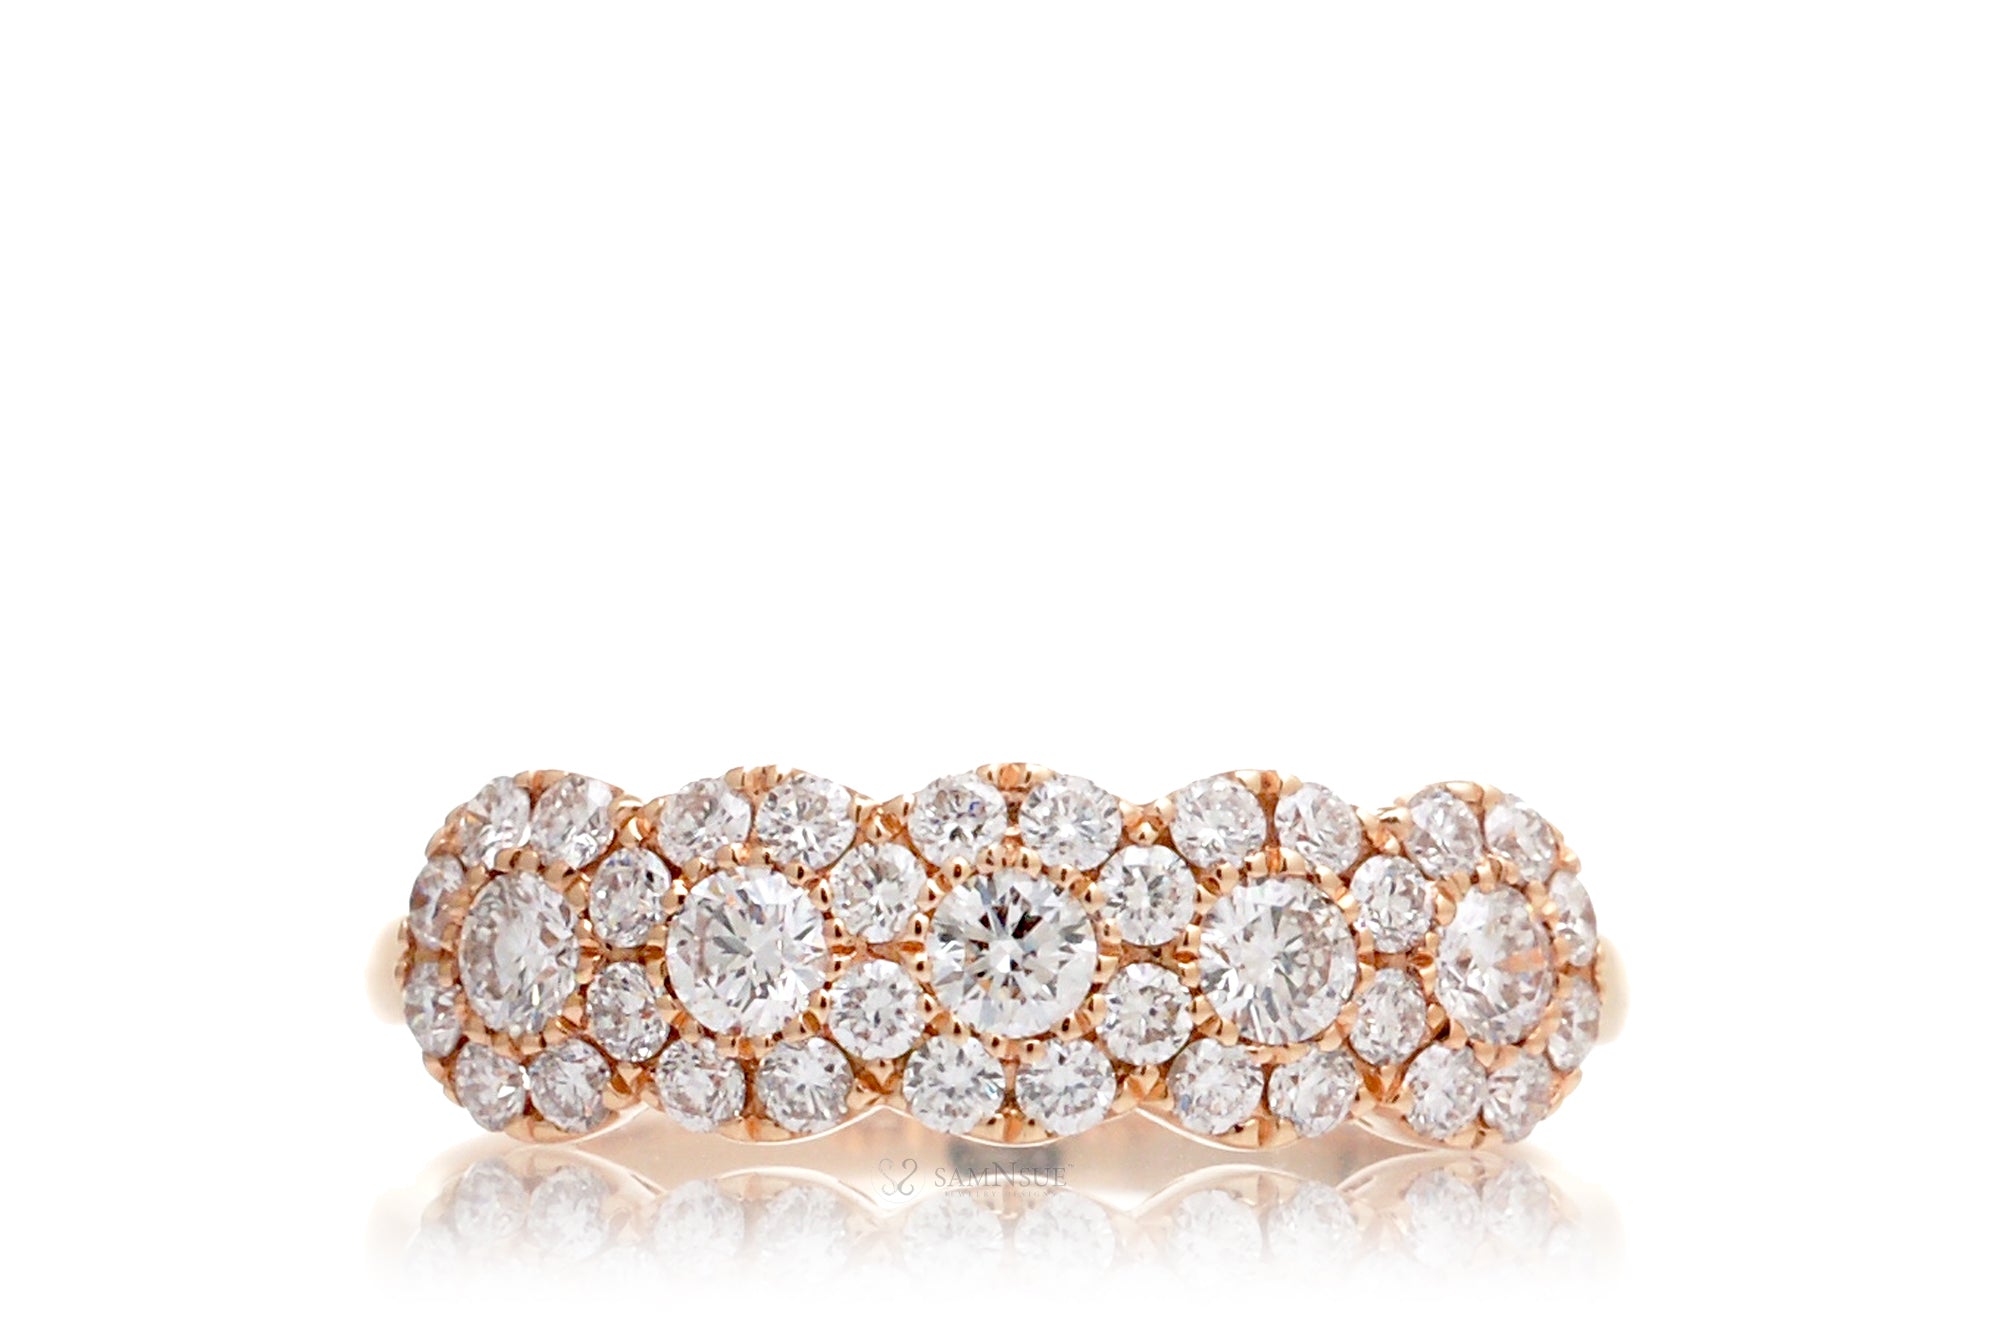 The Lana Diamond Ring